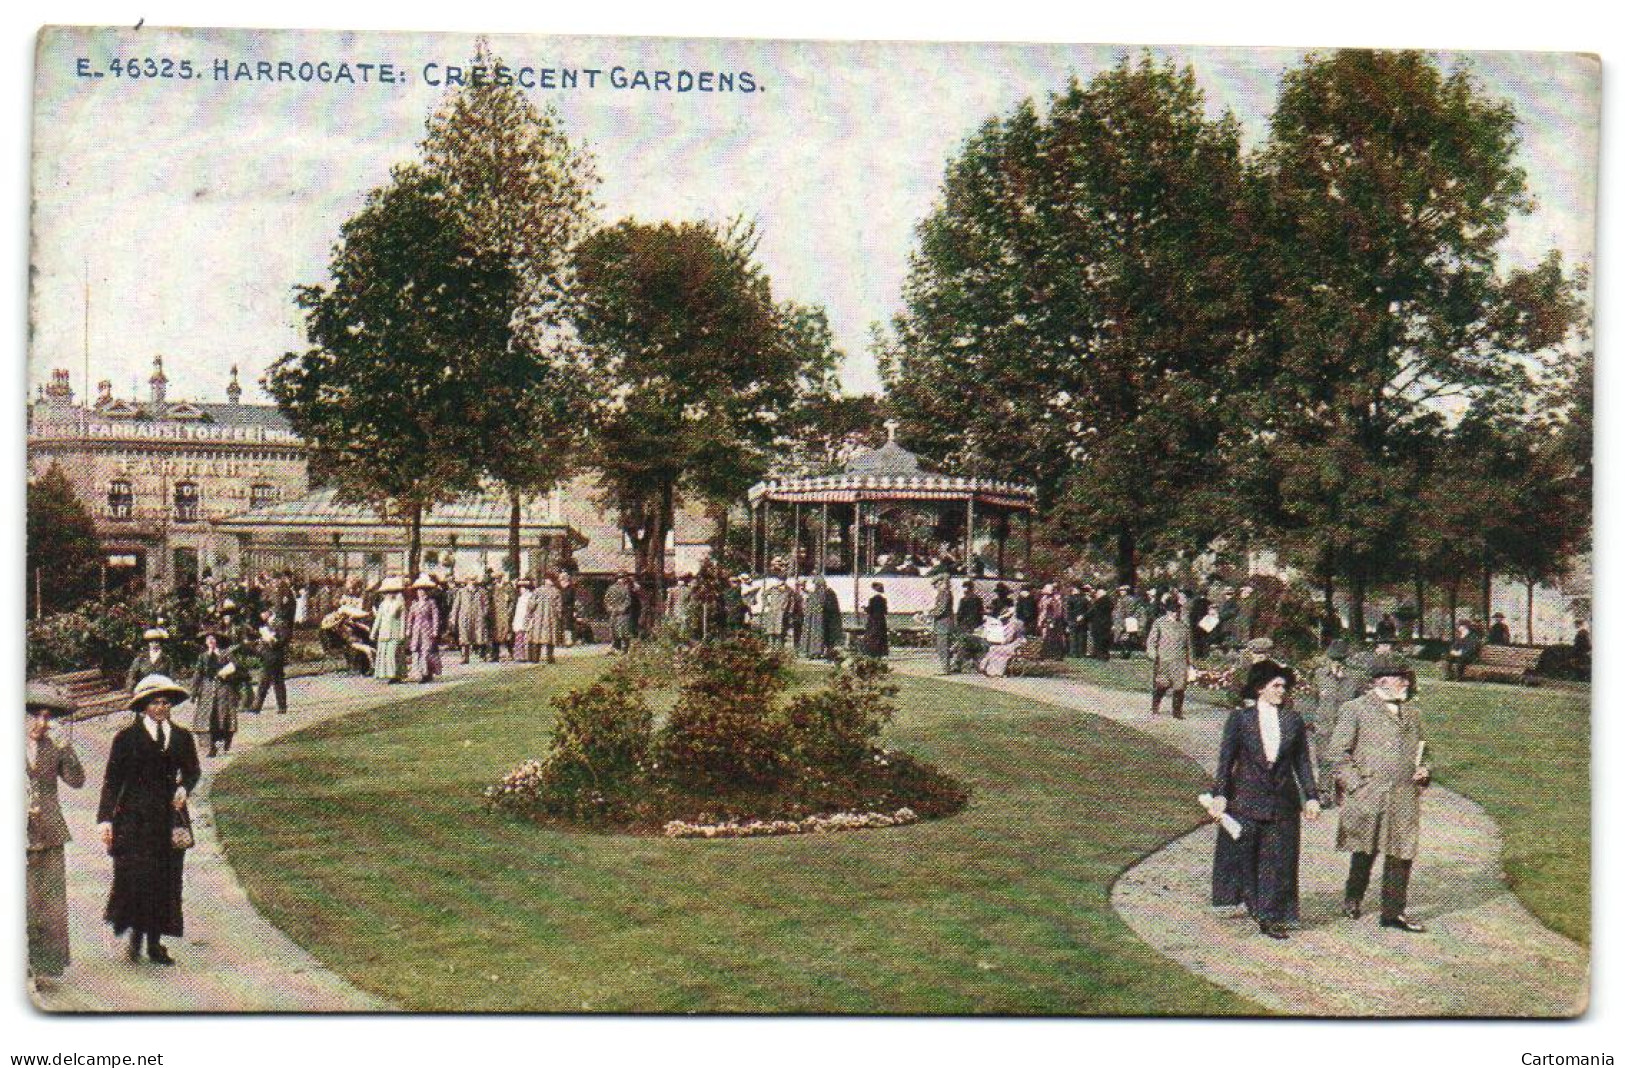 Harrogate - Crescent Gardens - Harrogate